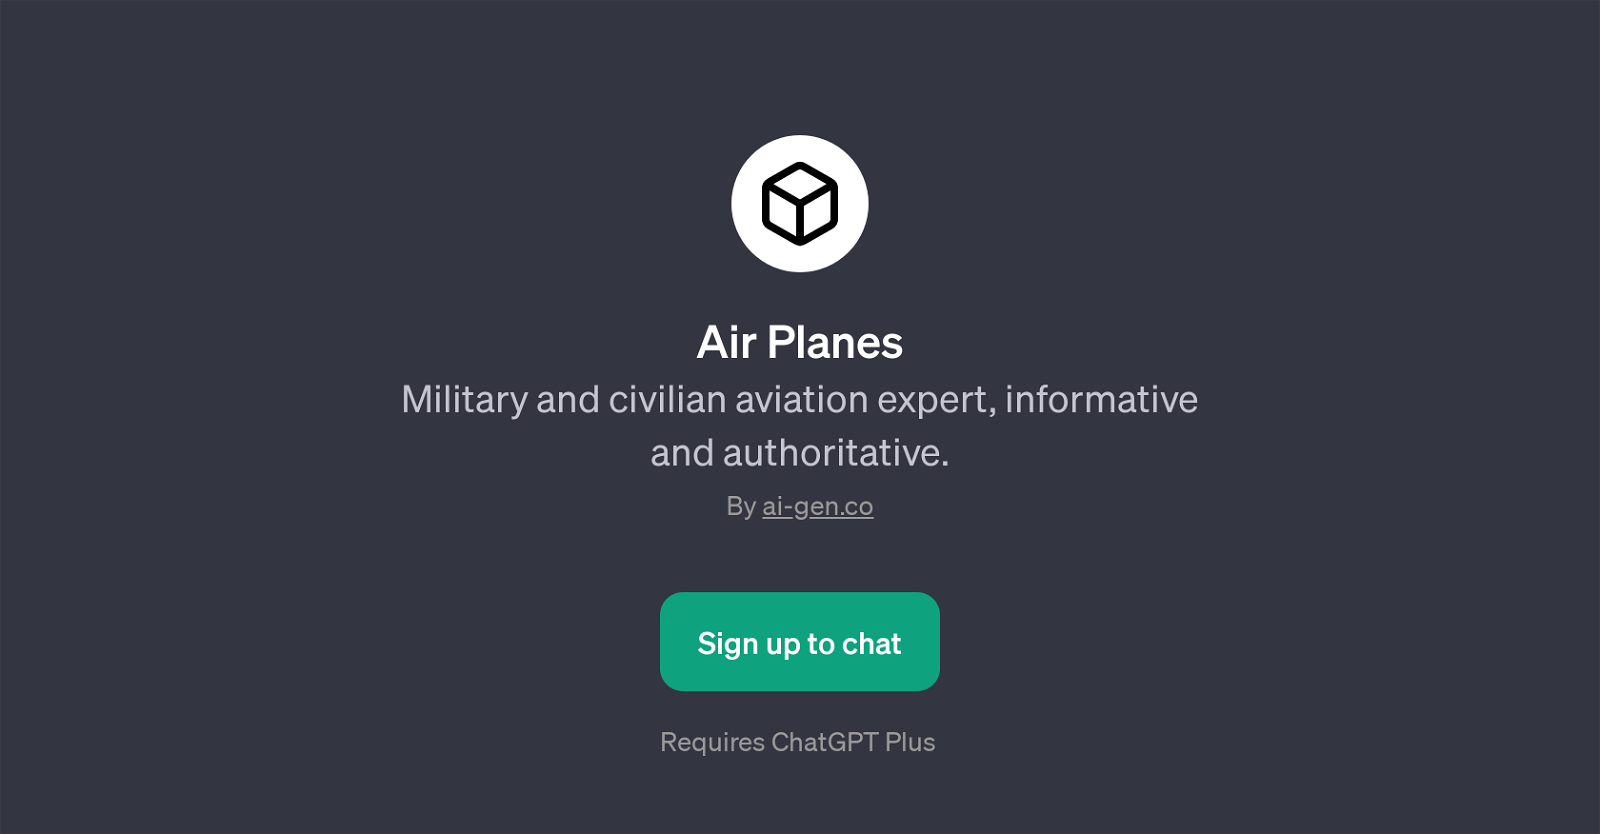 Air Planes website